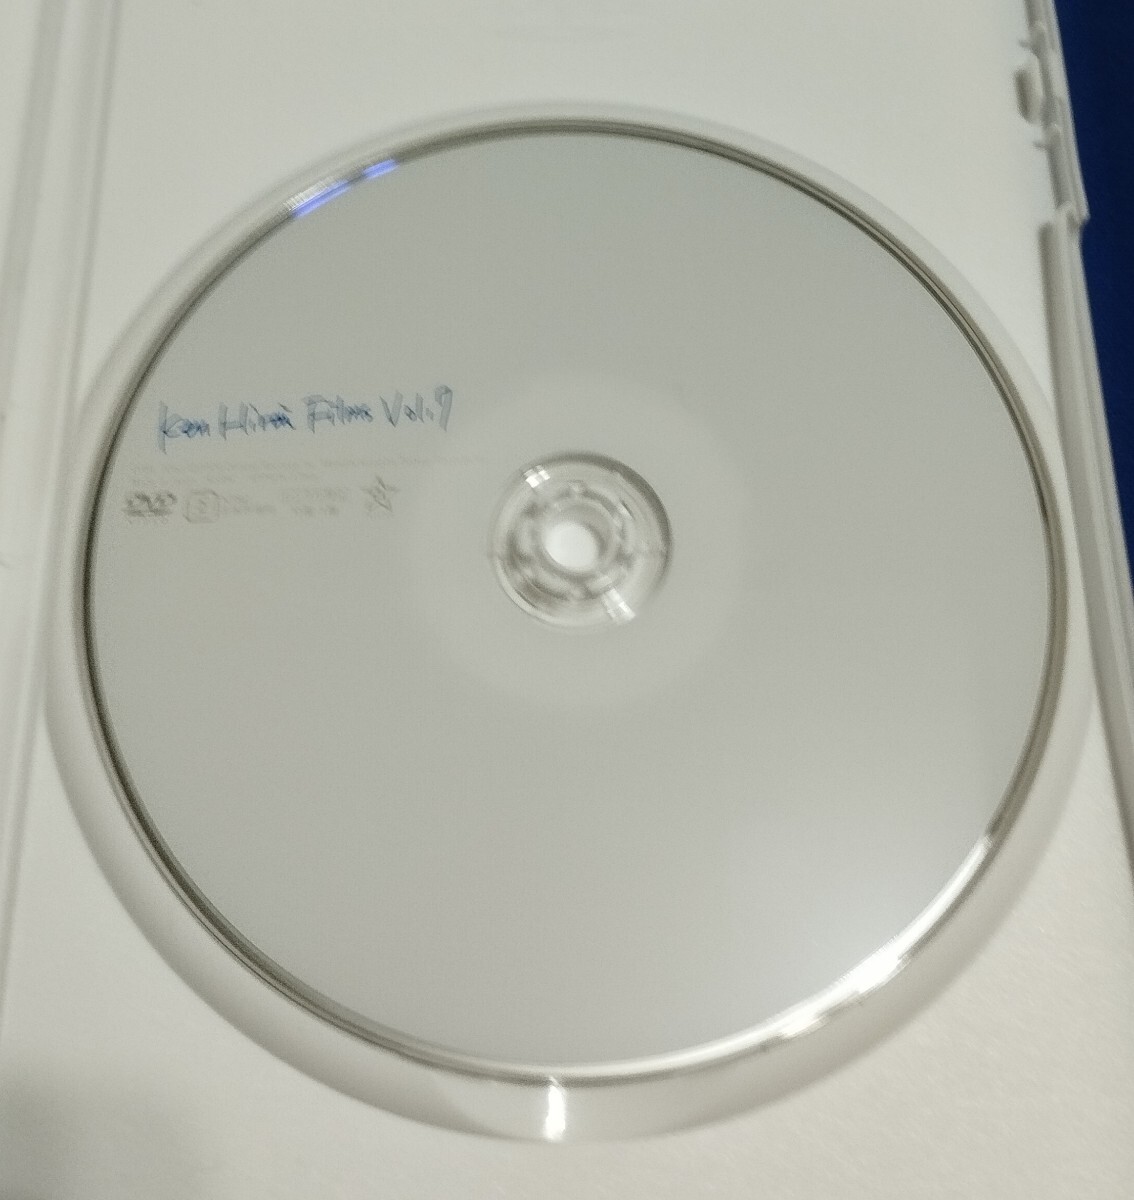 平井堅 Hirai FiIms VoI.7 DVDの画像3